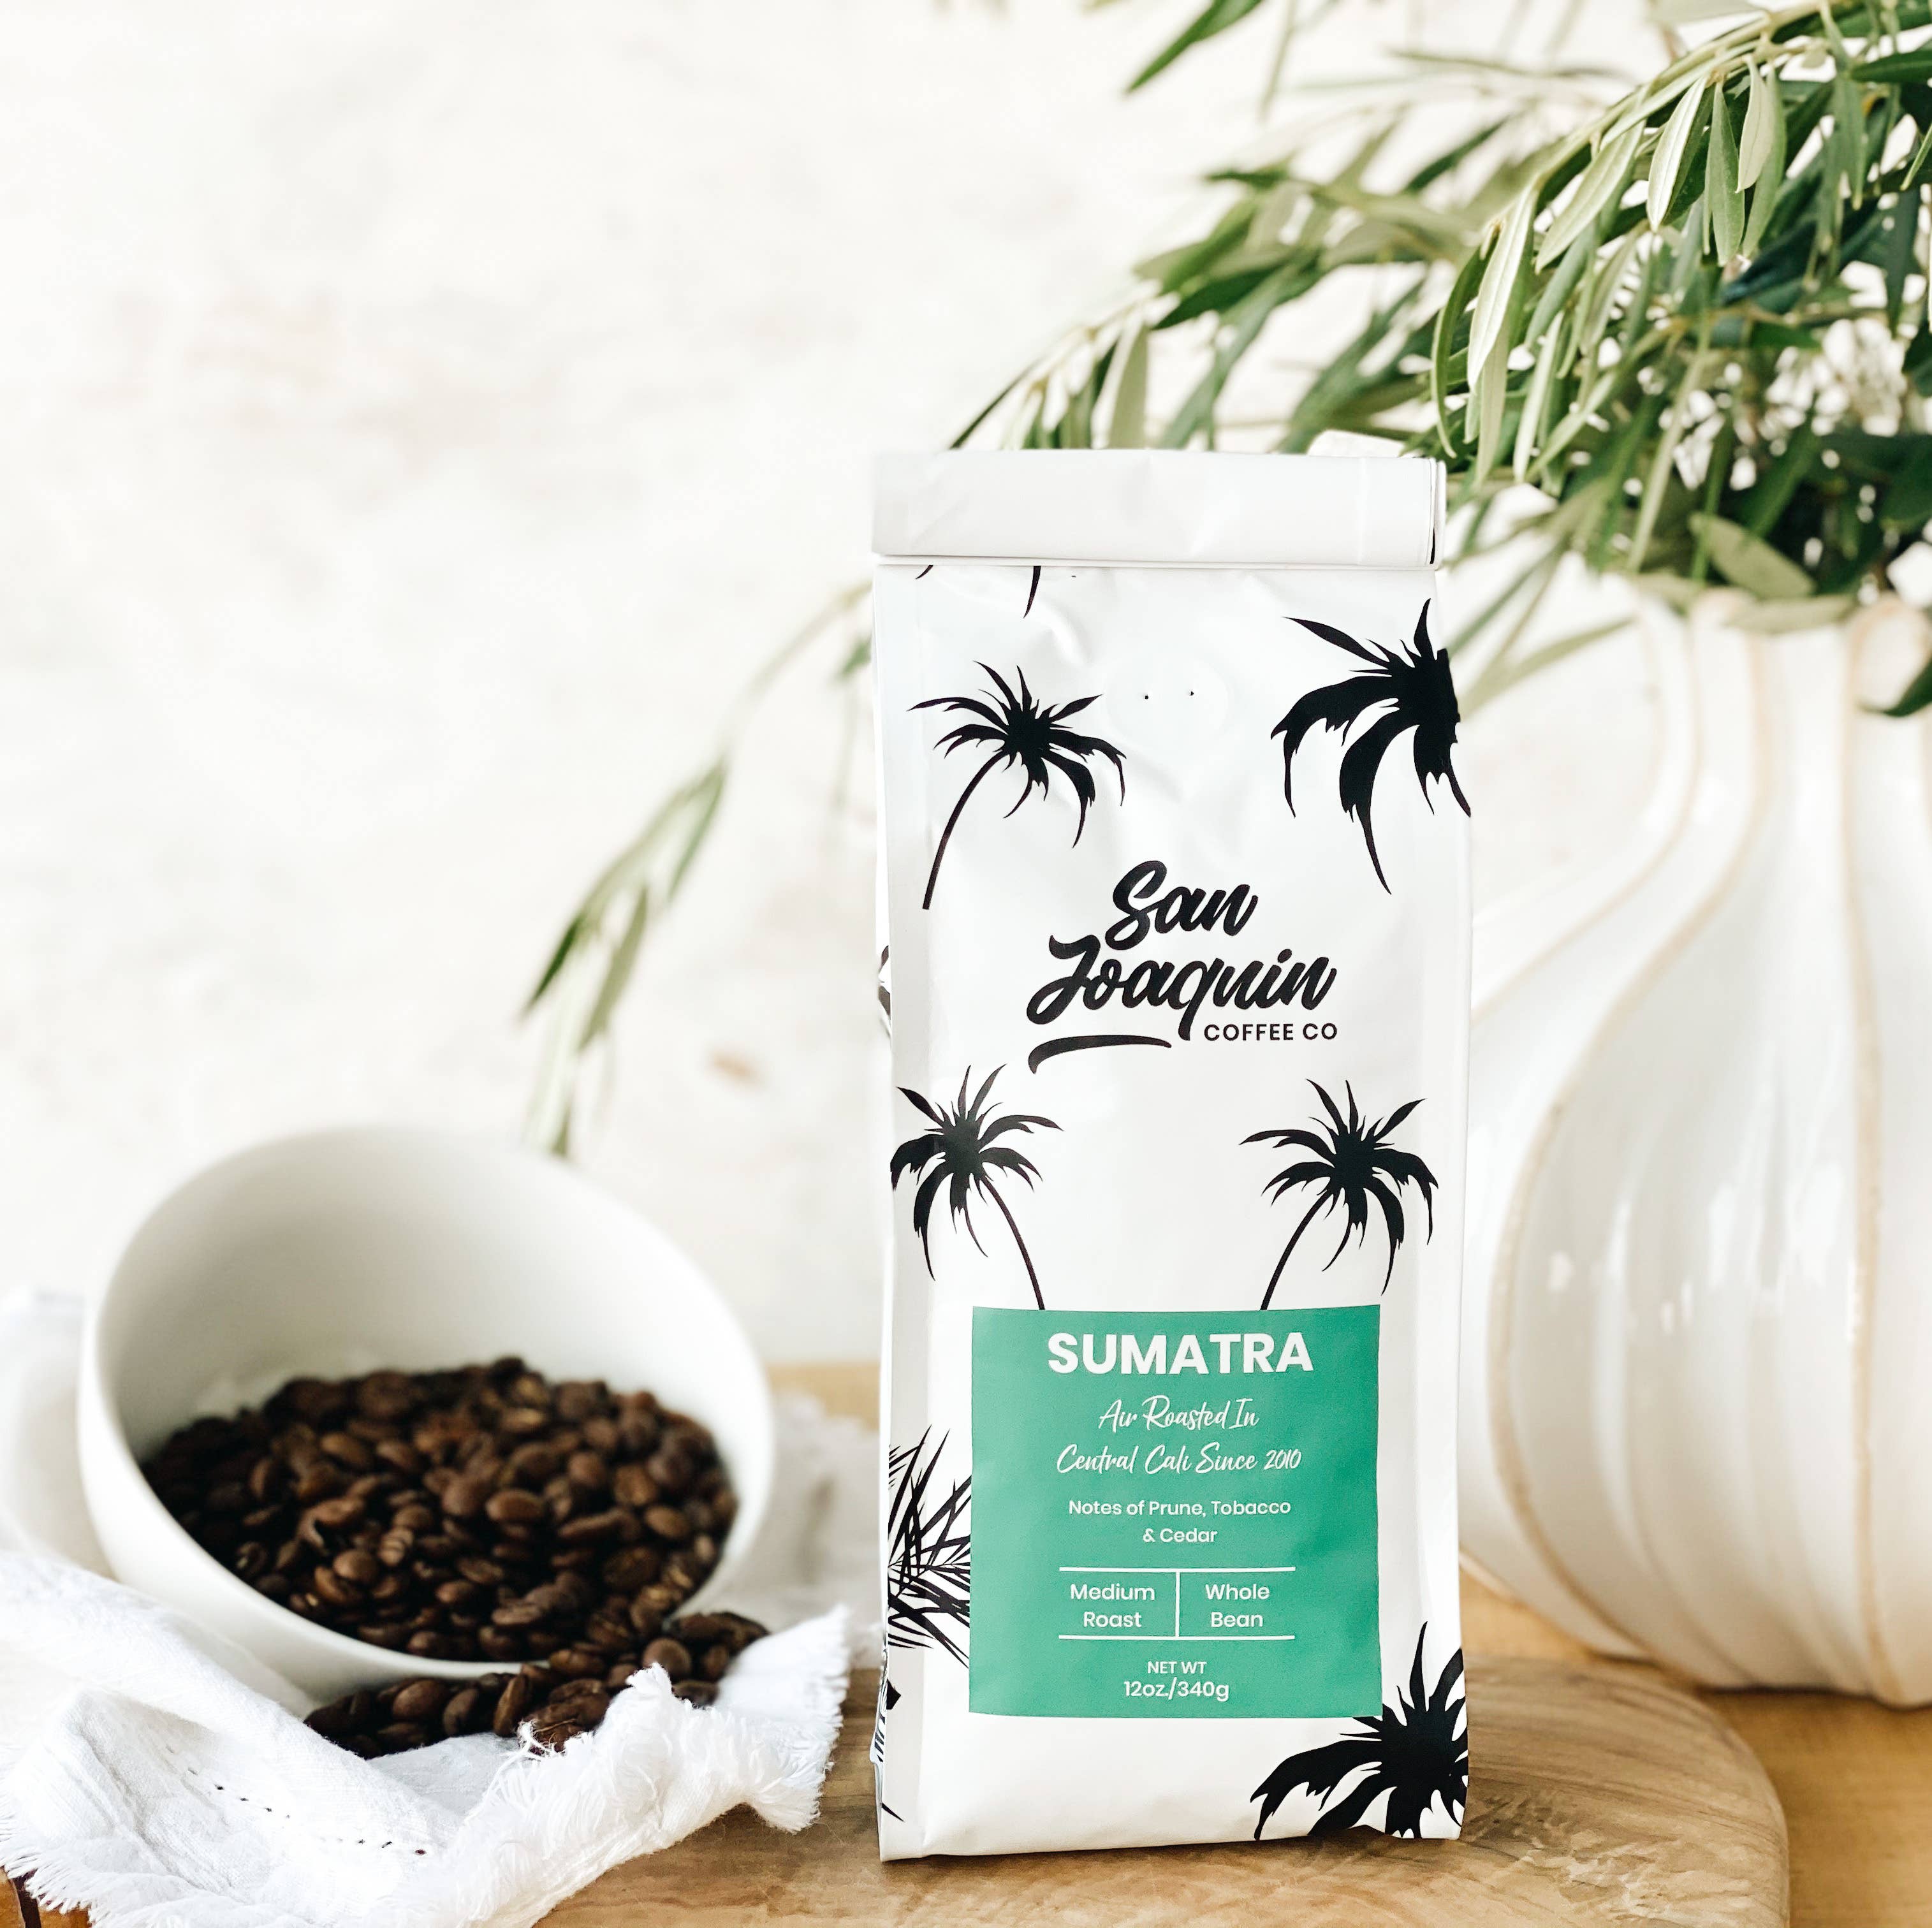 Coffee Lover's Gift Guide - San Joaquin Coffee Co